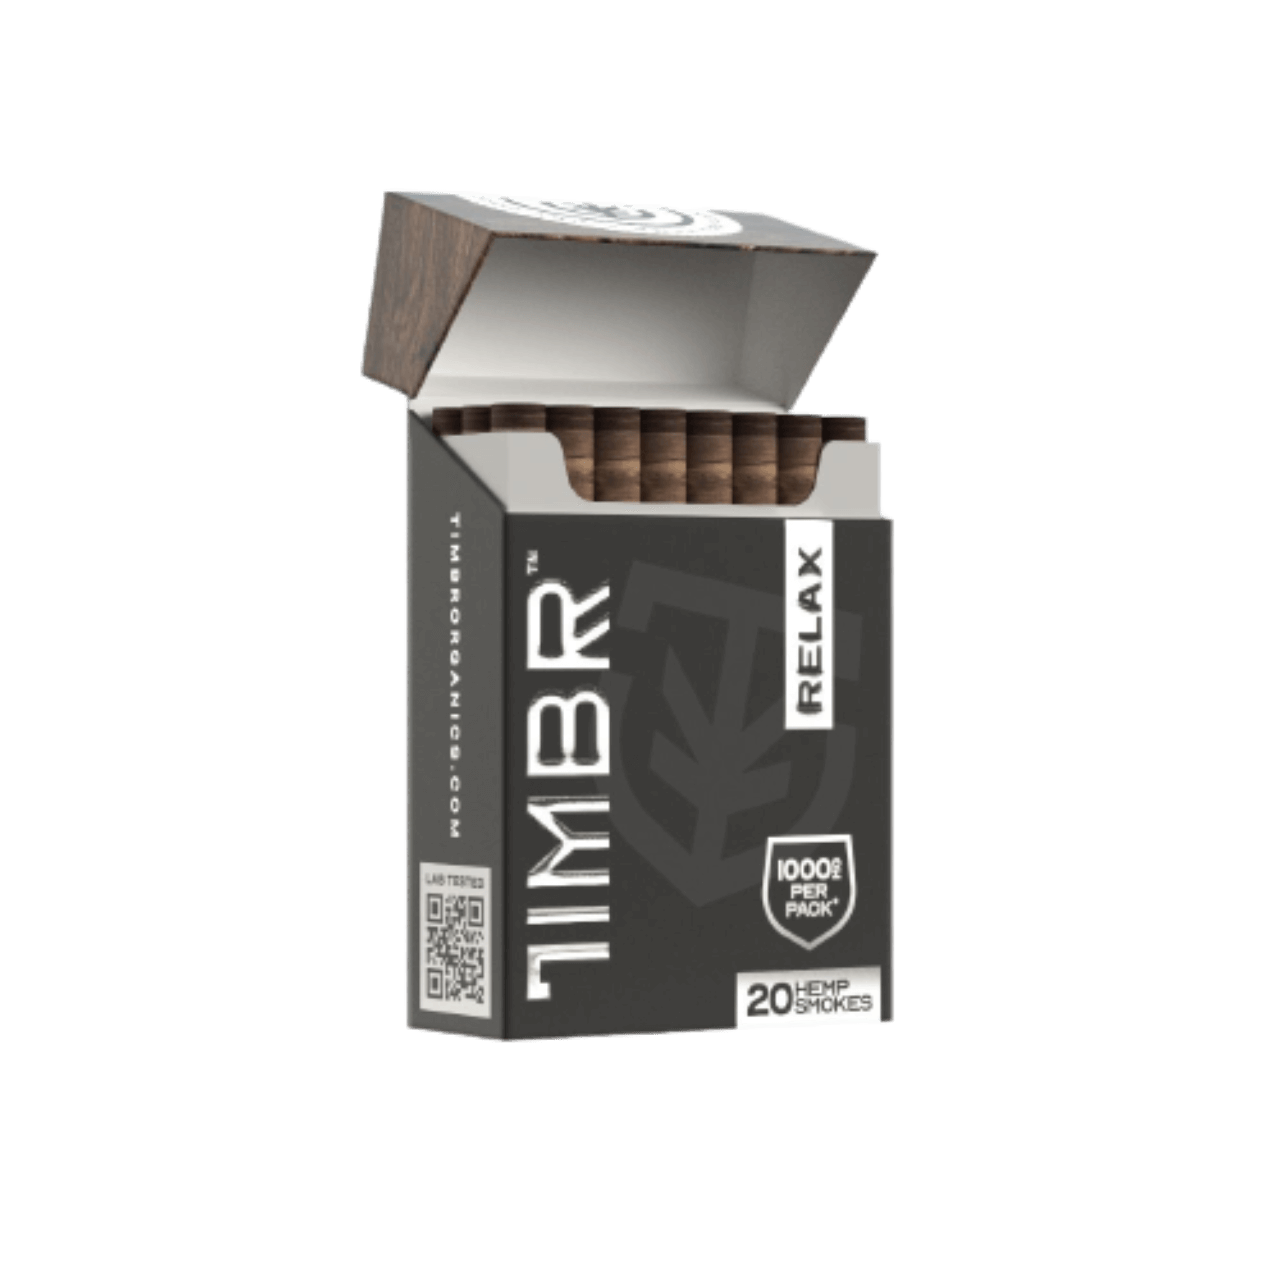 TIMBR Hemp Filter Cigarette Smokes